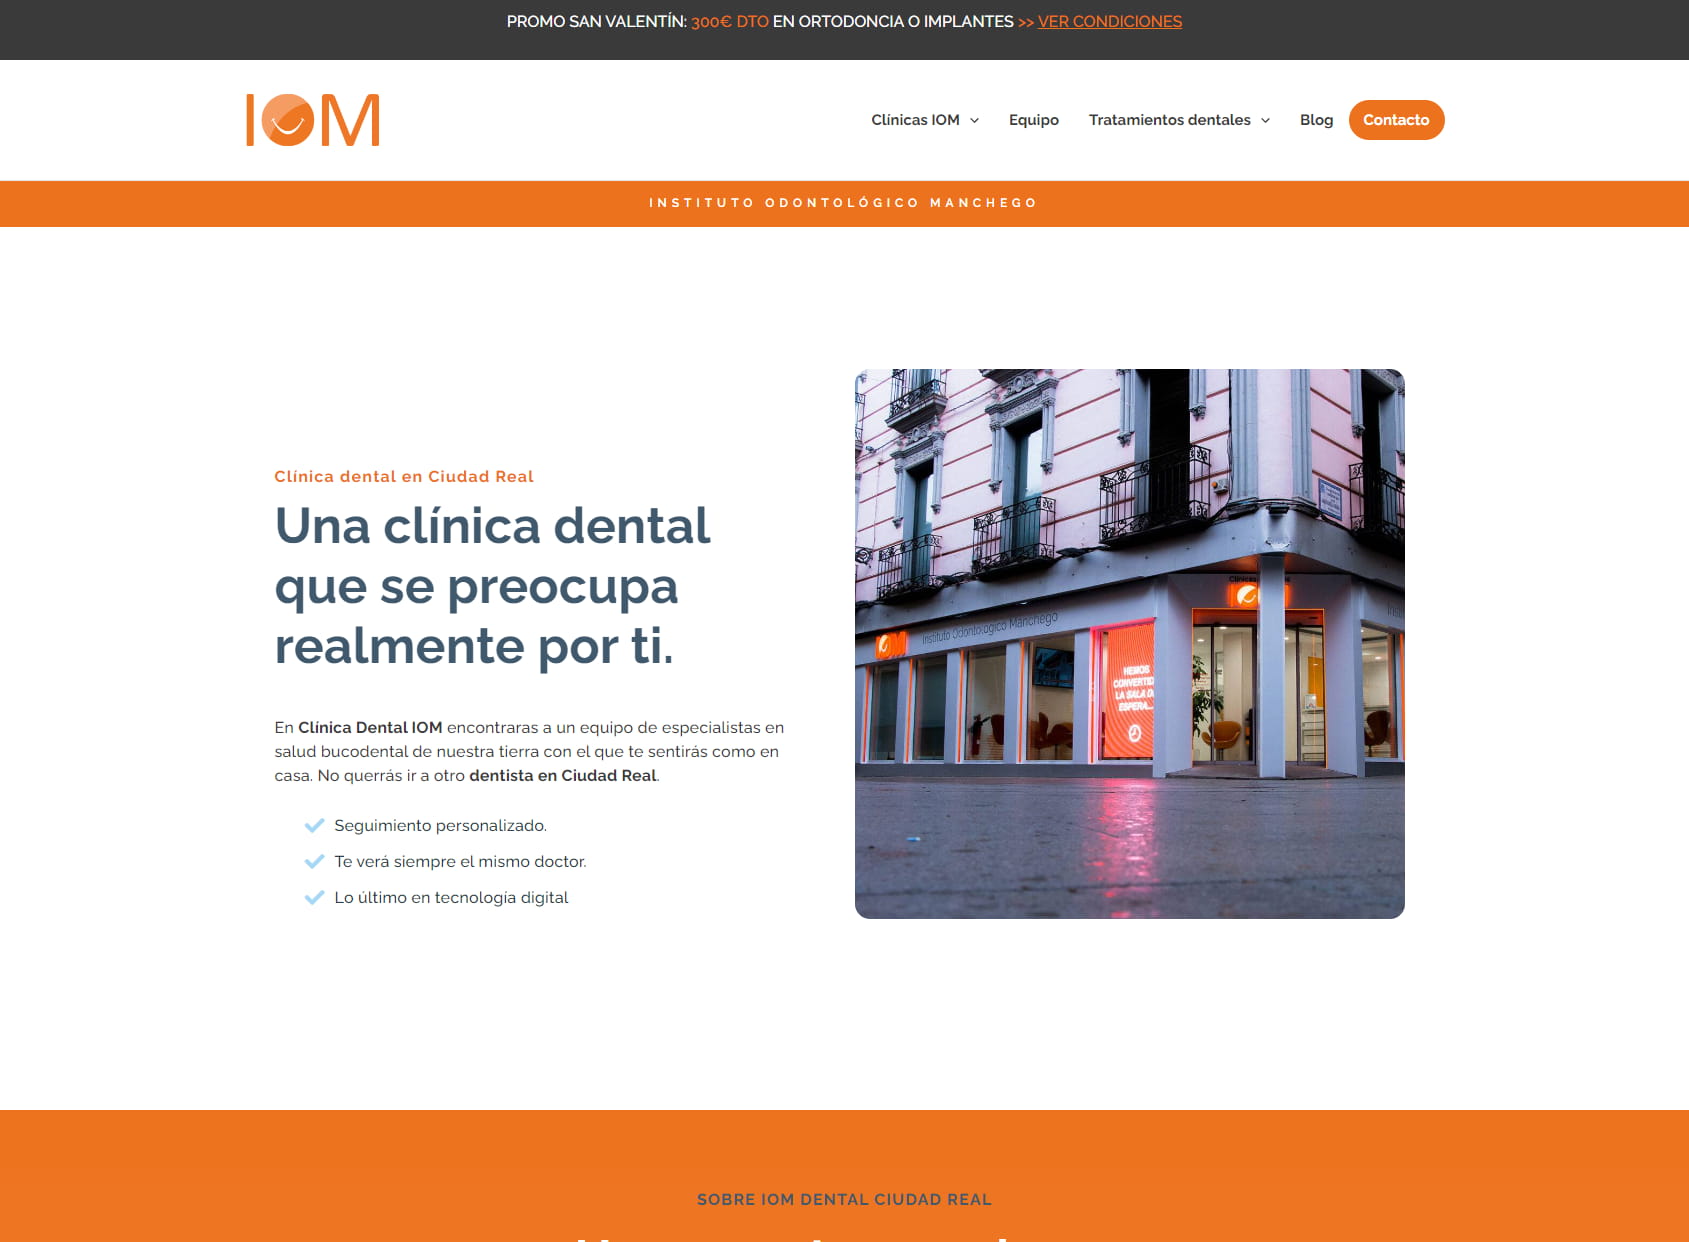 Clínica dental IOM Ciudad Real (Instituto Odontológico Manchego)